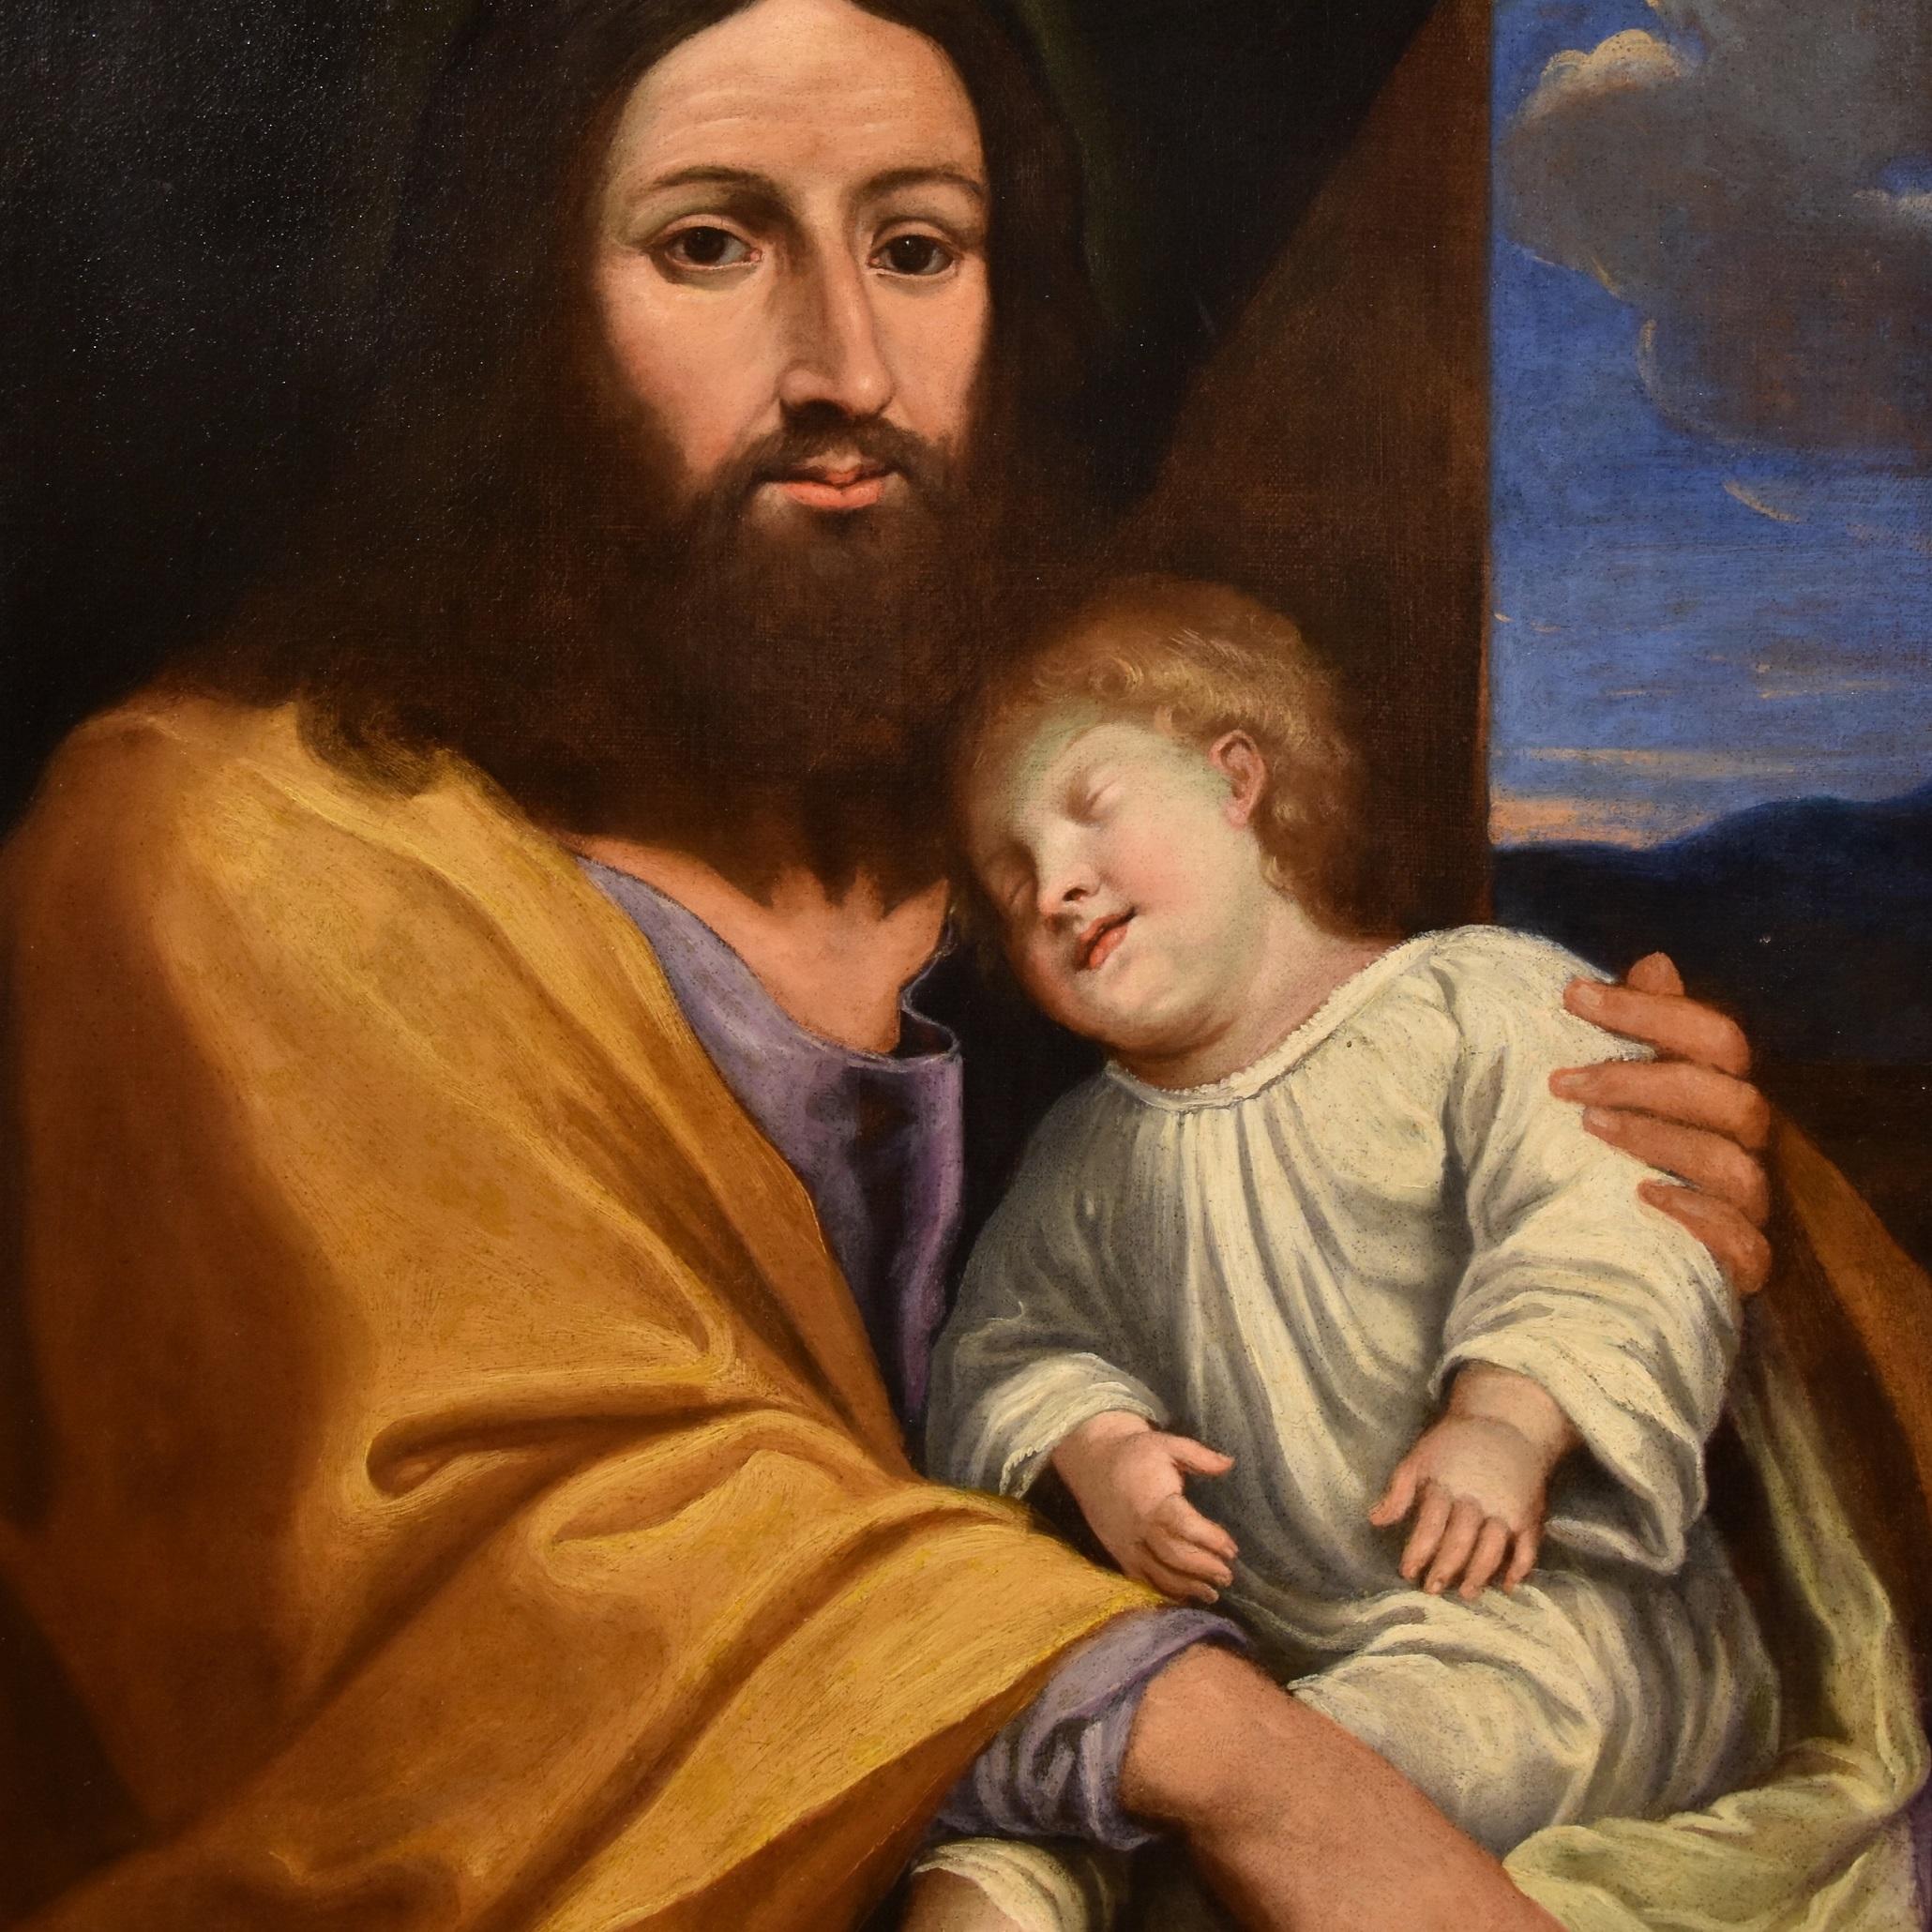 Jesus Sohn Salvi, Gemälde Öl auf Leinwand, alter Meister, 17. Jahrhundert, Italienisch, religiös (Alte Meister), Painting, von Giovan Battista Salvi known as 